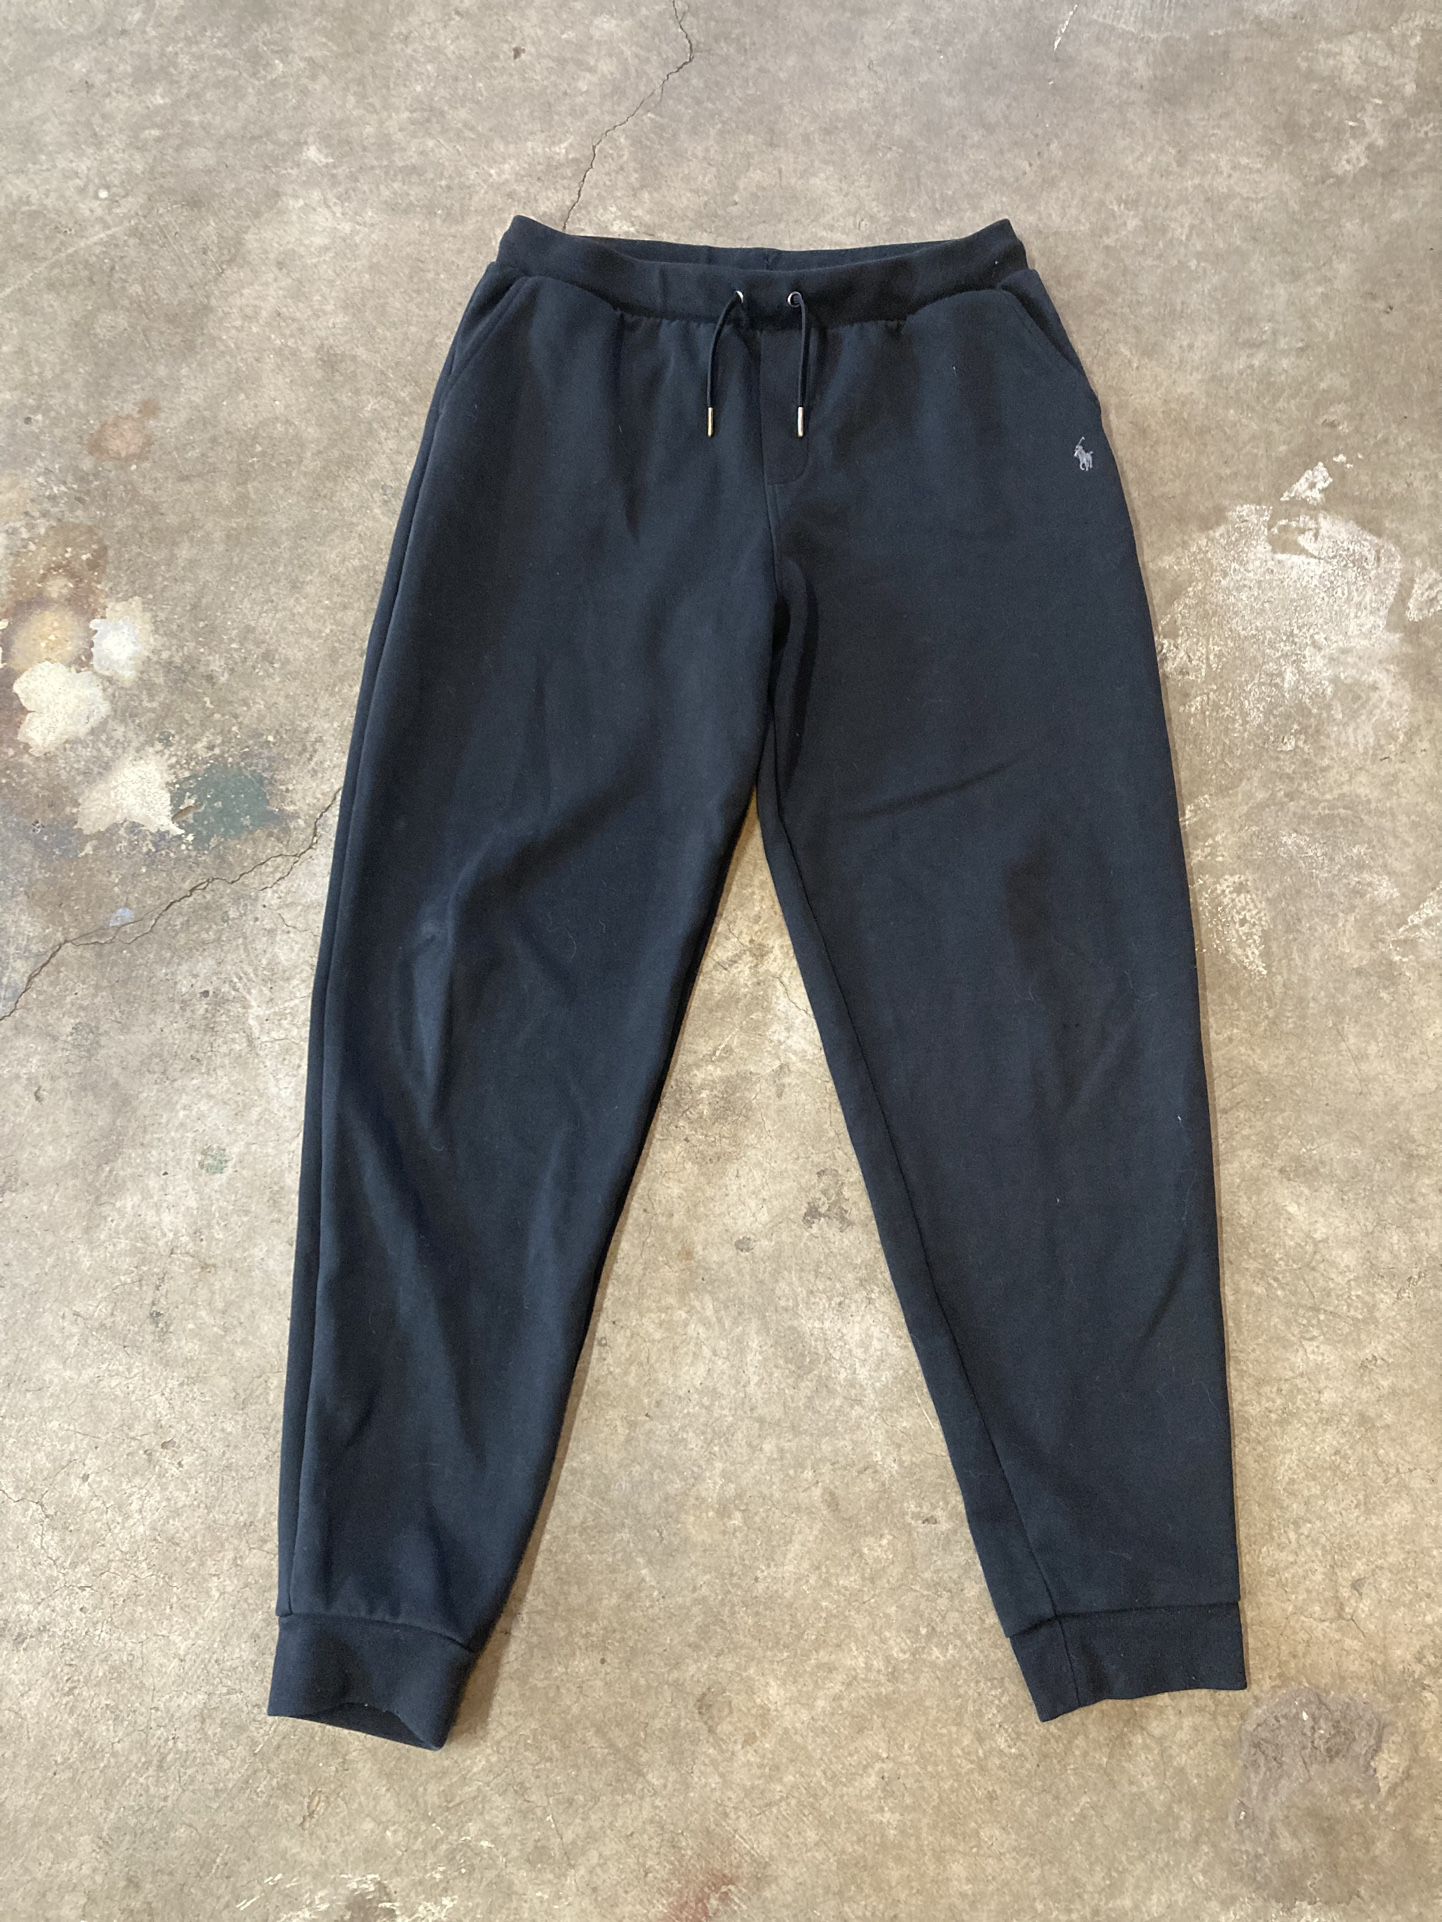 Polo Ralph Lauren Sweatpants Size Youth XL